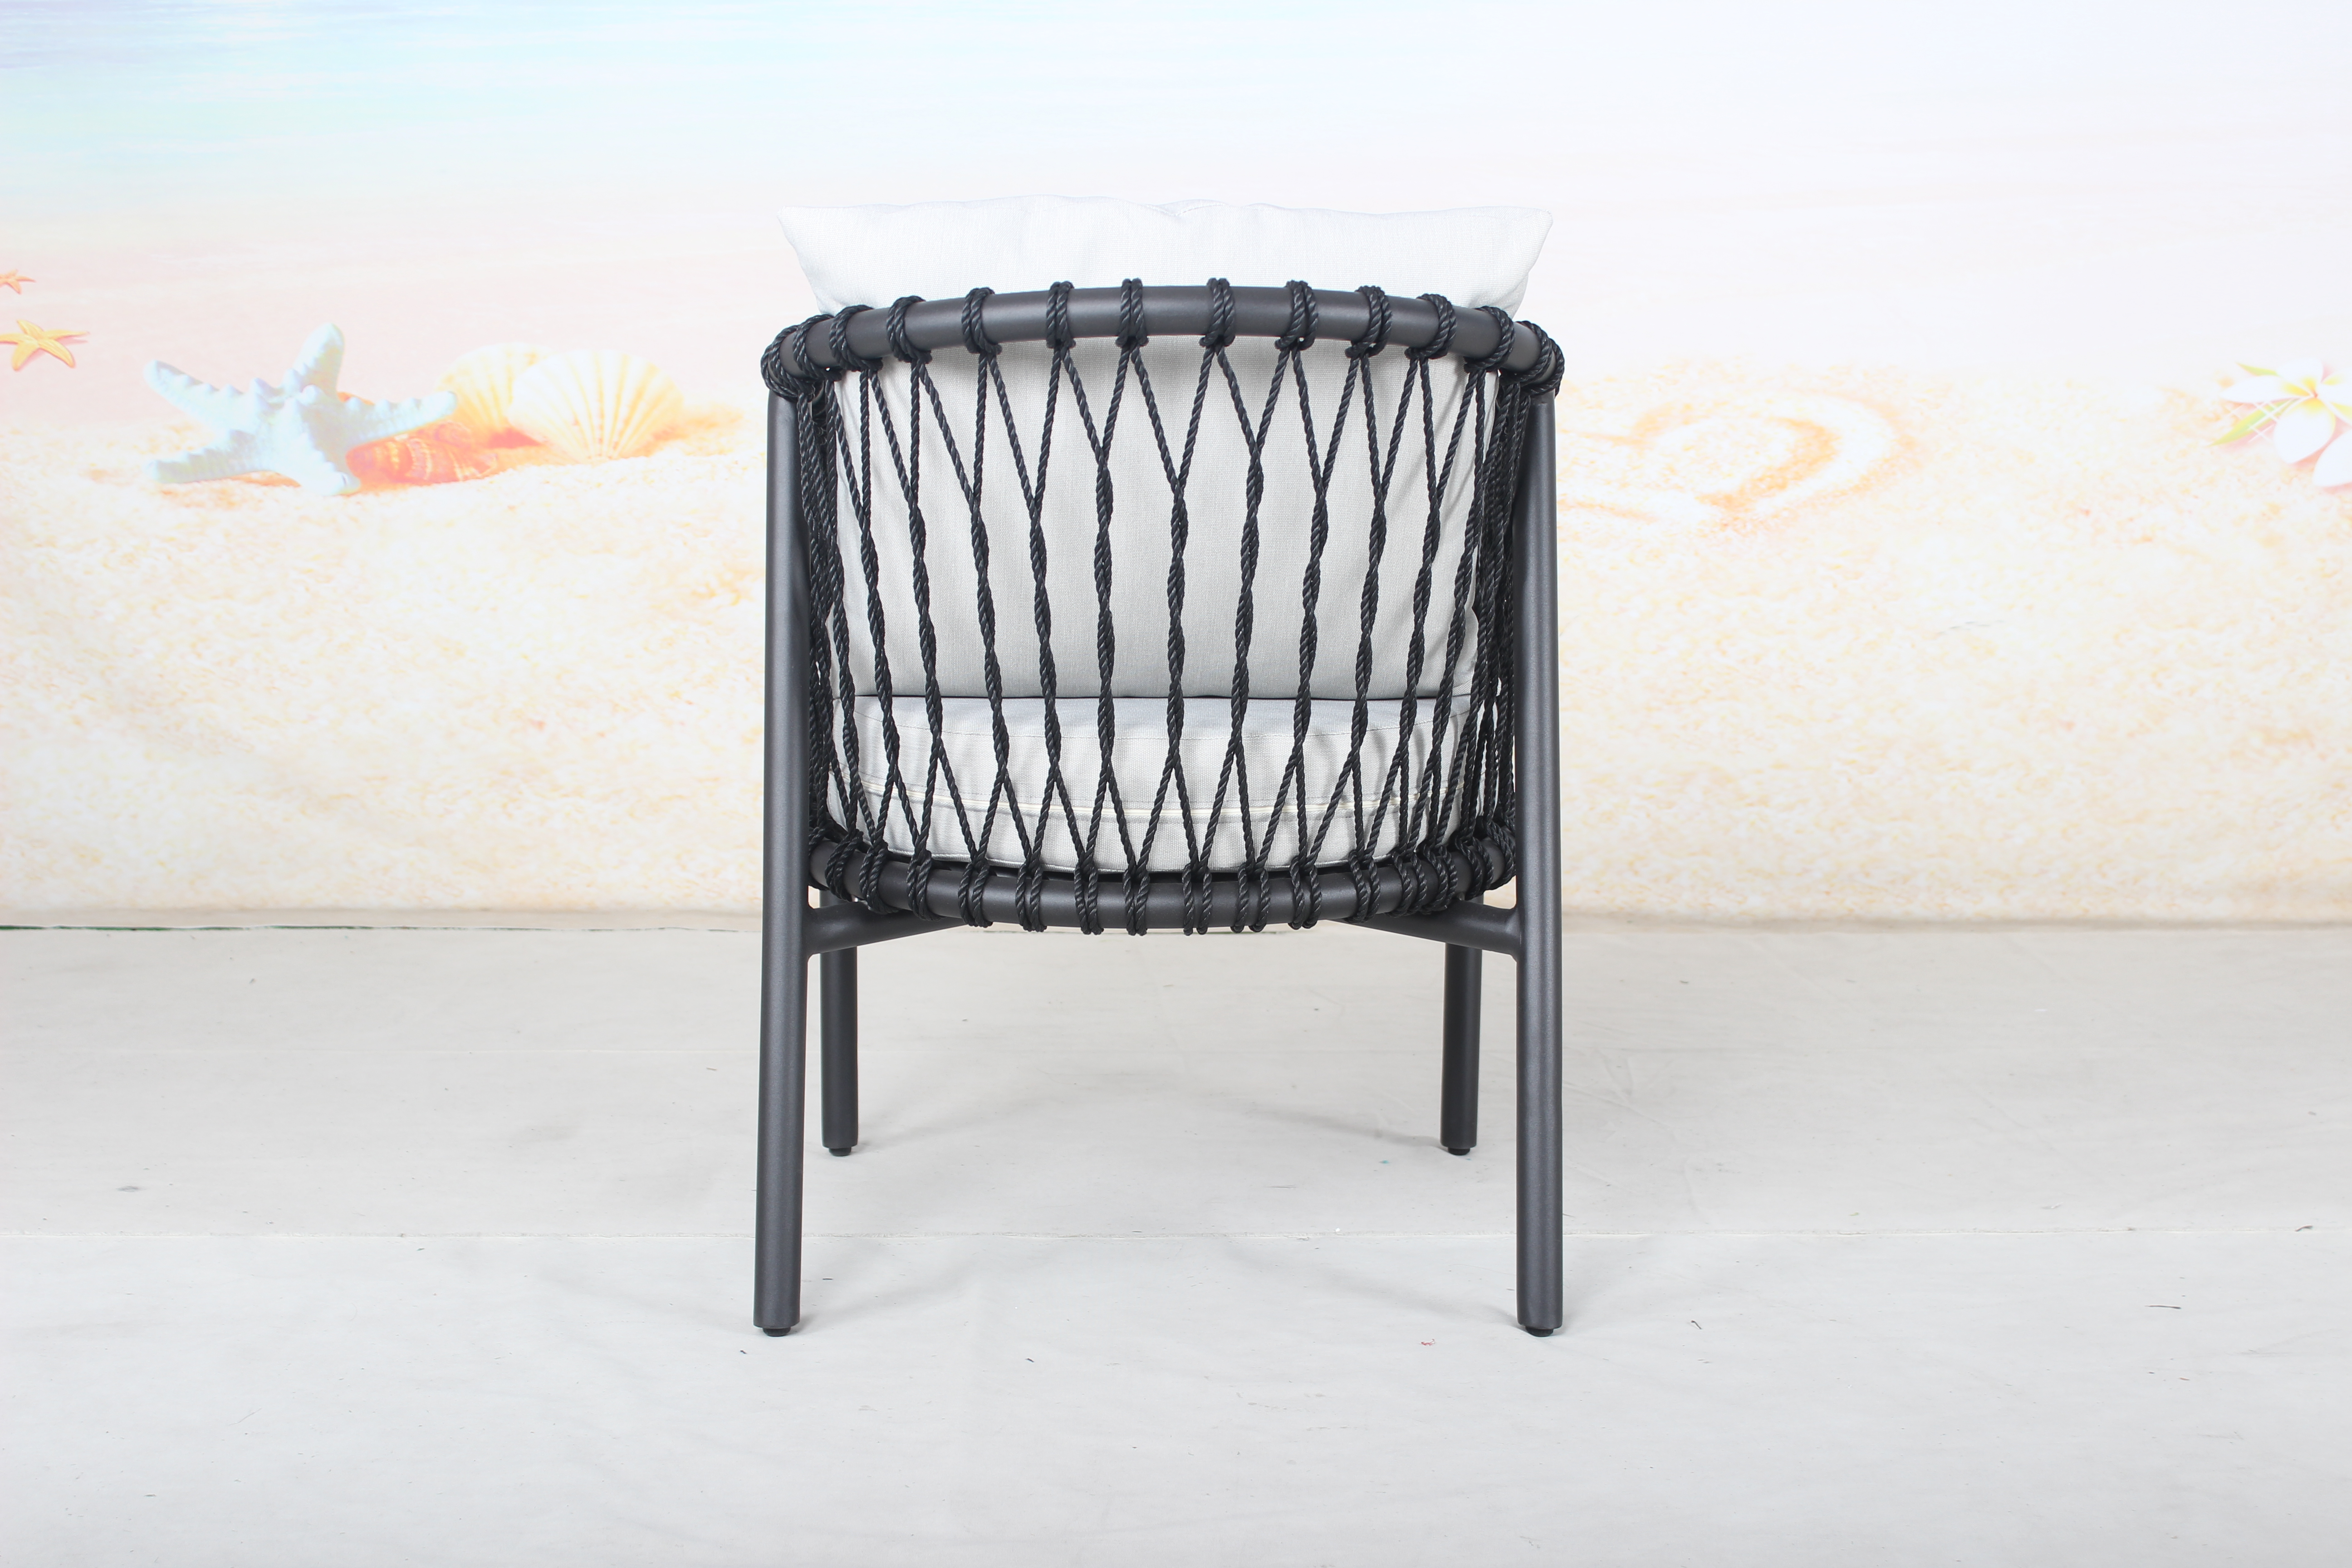 Black rope balcony leisure chair